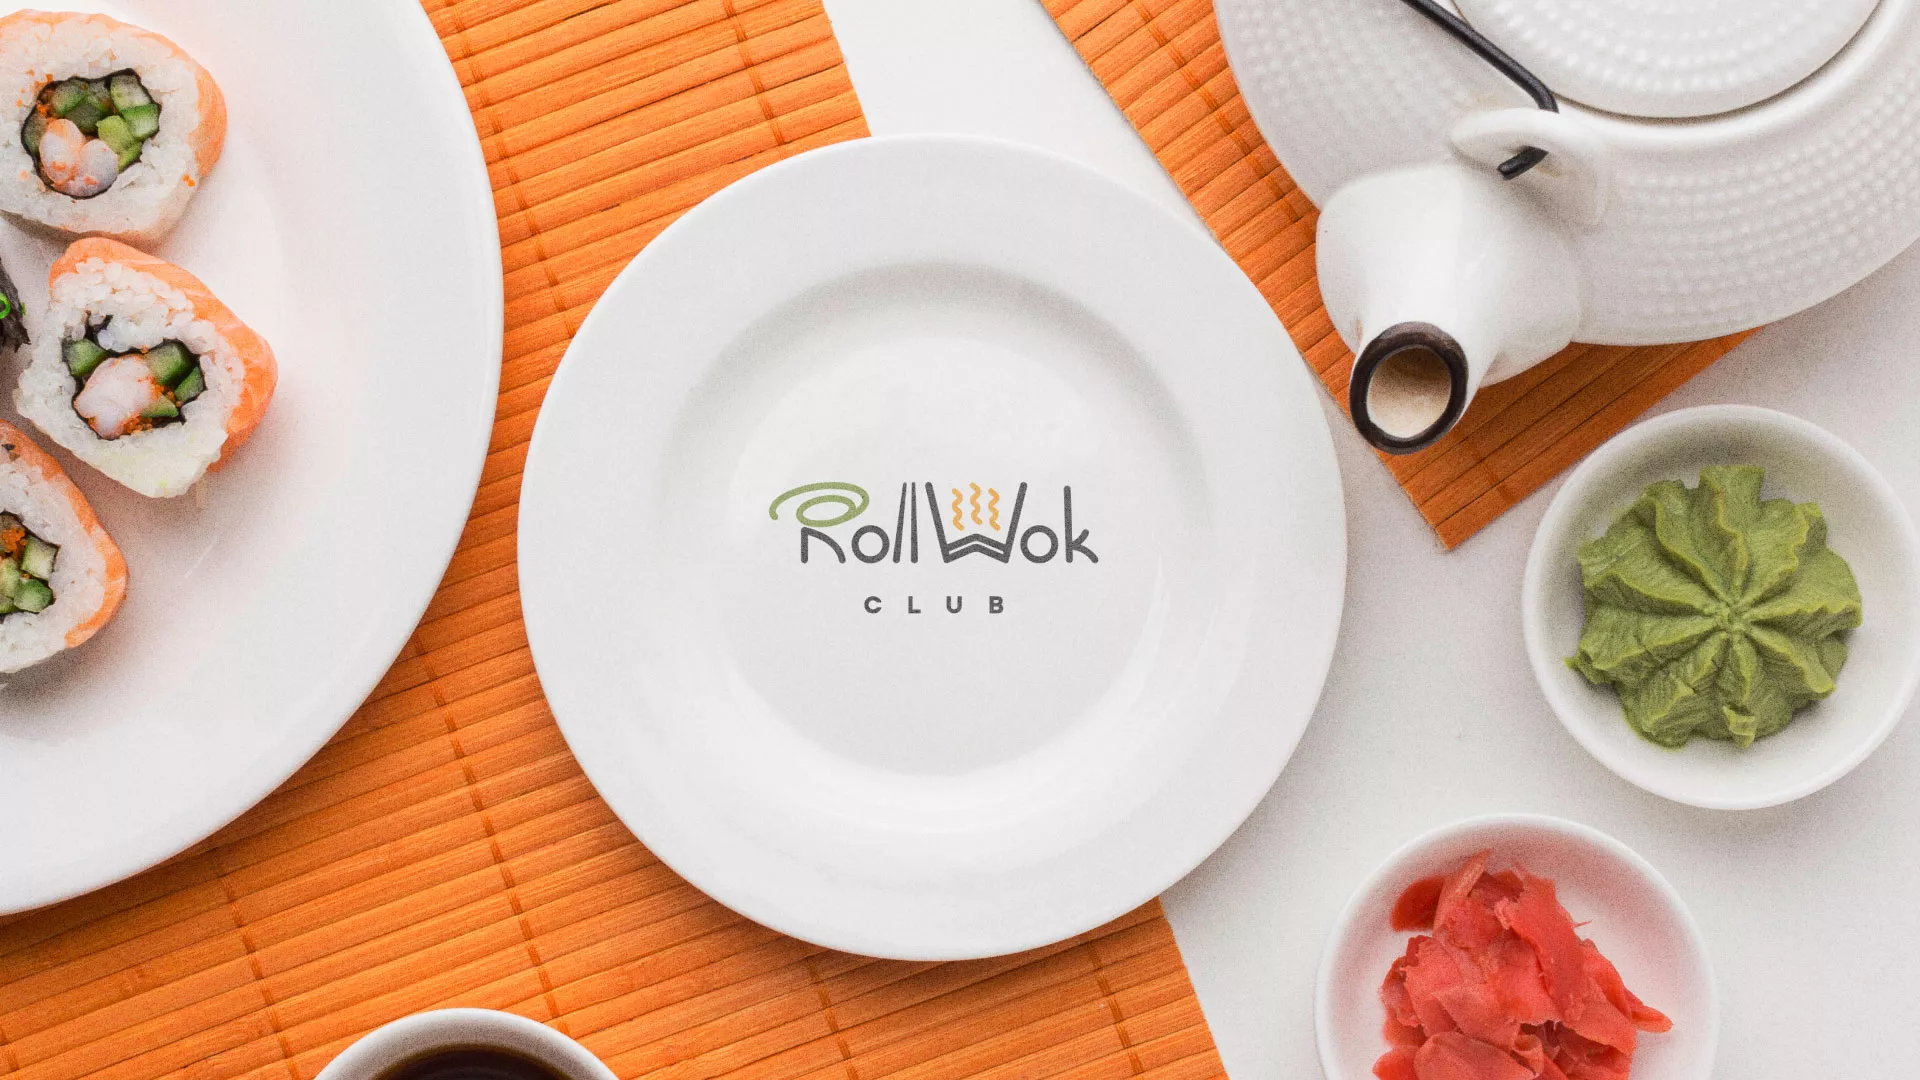 Разработка логотипа и фирменного стиля суши-бара «Roll Wok Club» в Николаевске-на-Амуре